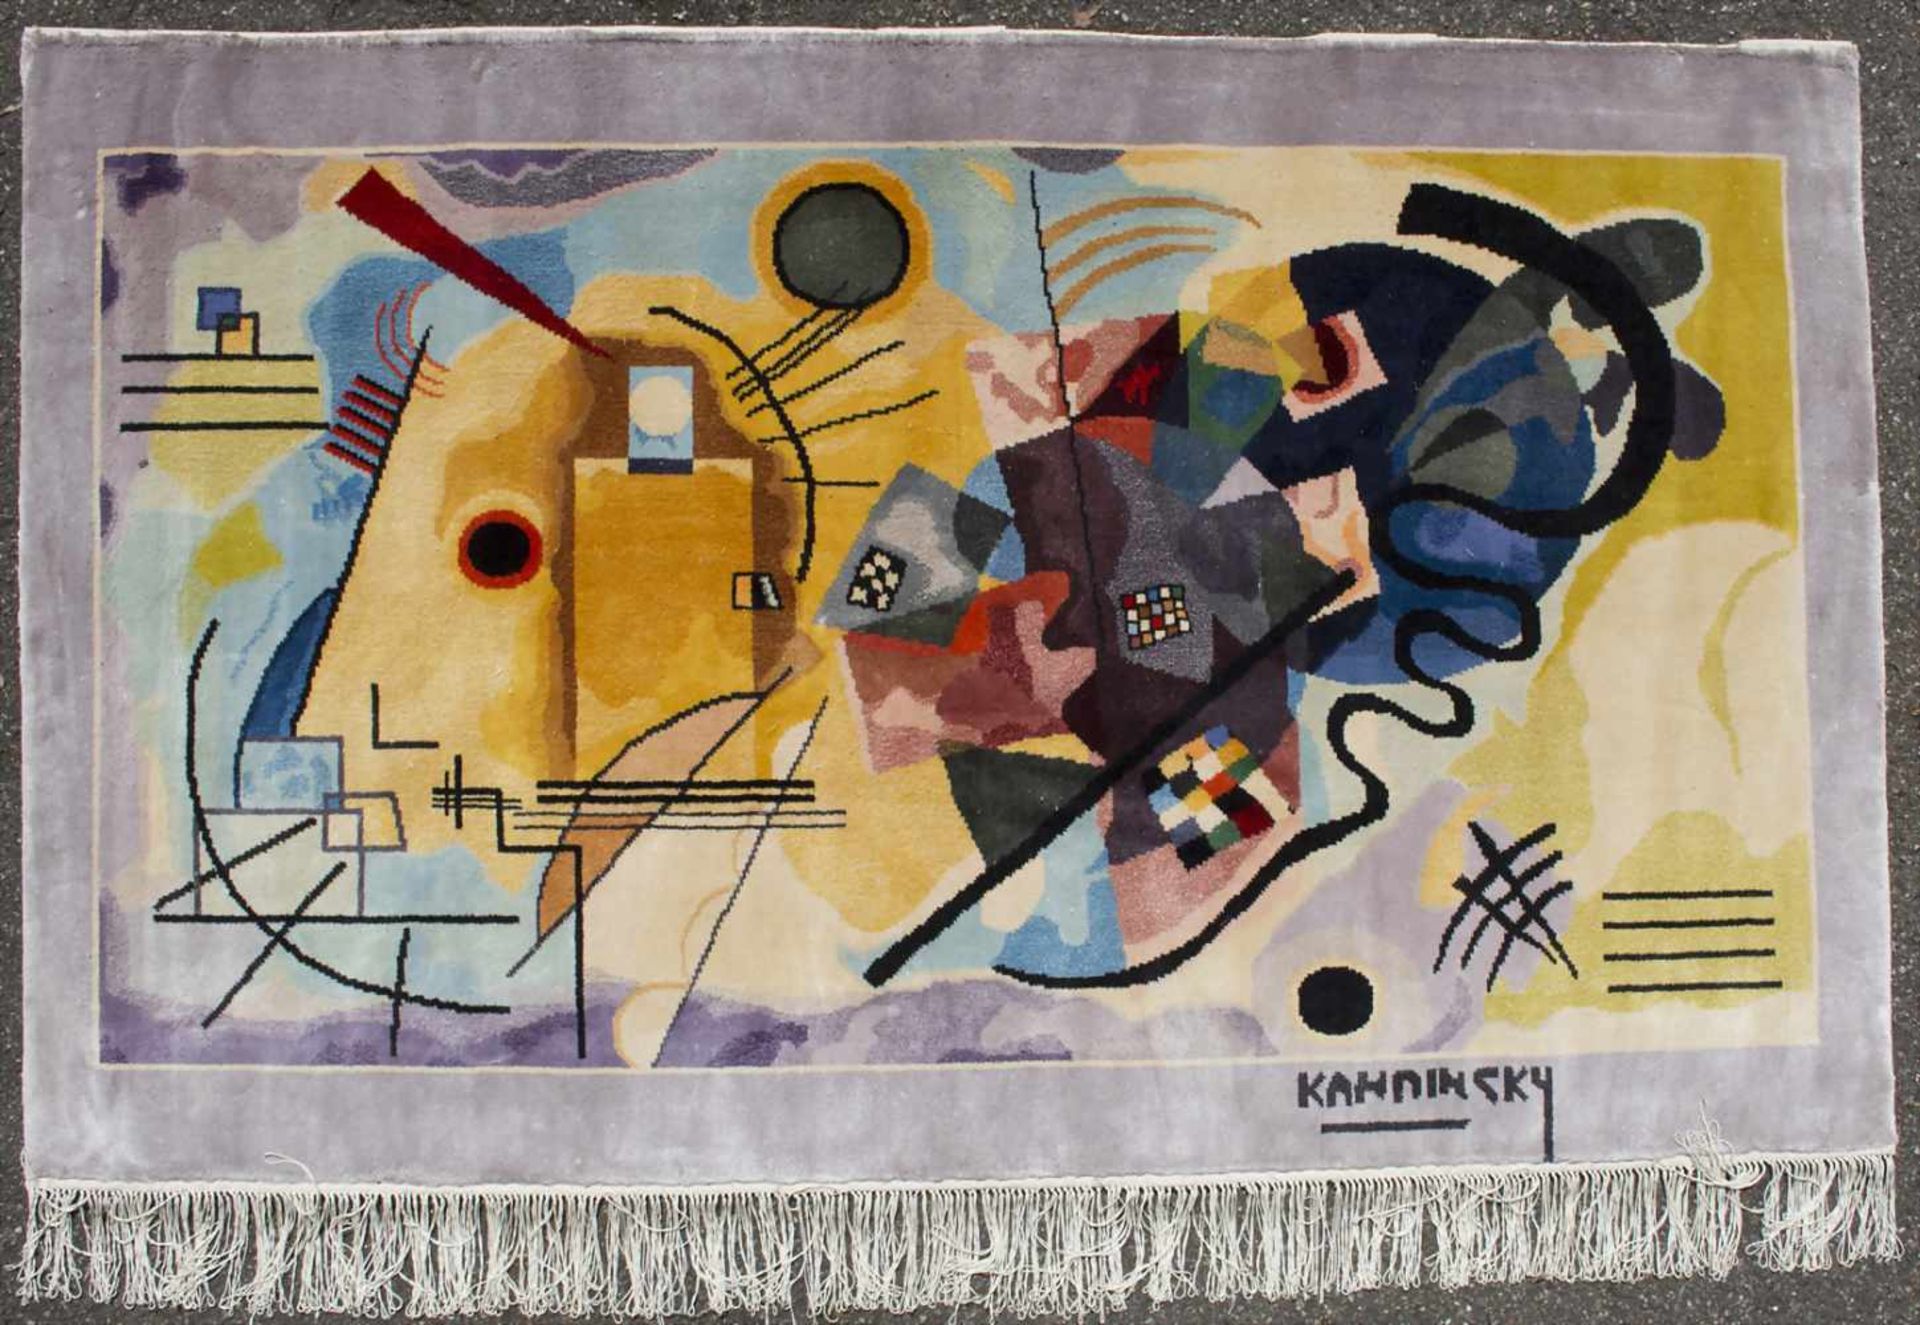 Seidenteppich 'Kandinsky' / A silk carpet 'Kandinsky'Material: Seide auf Seide,Maße: 151 x 93 cm,